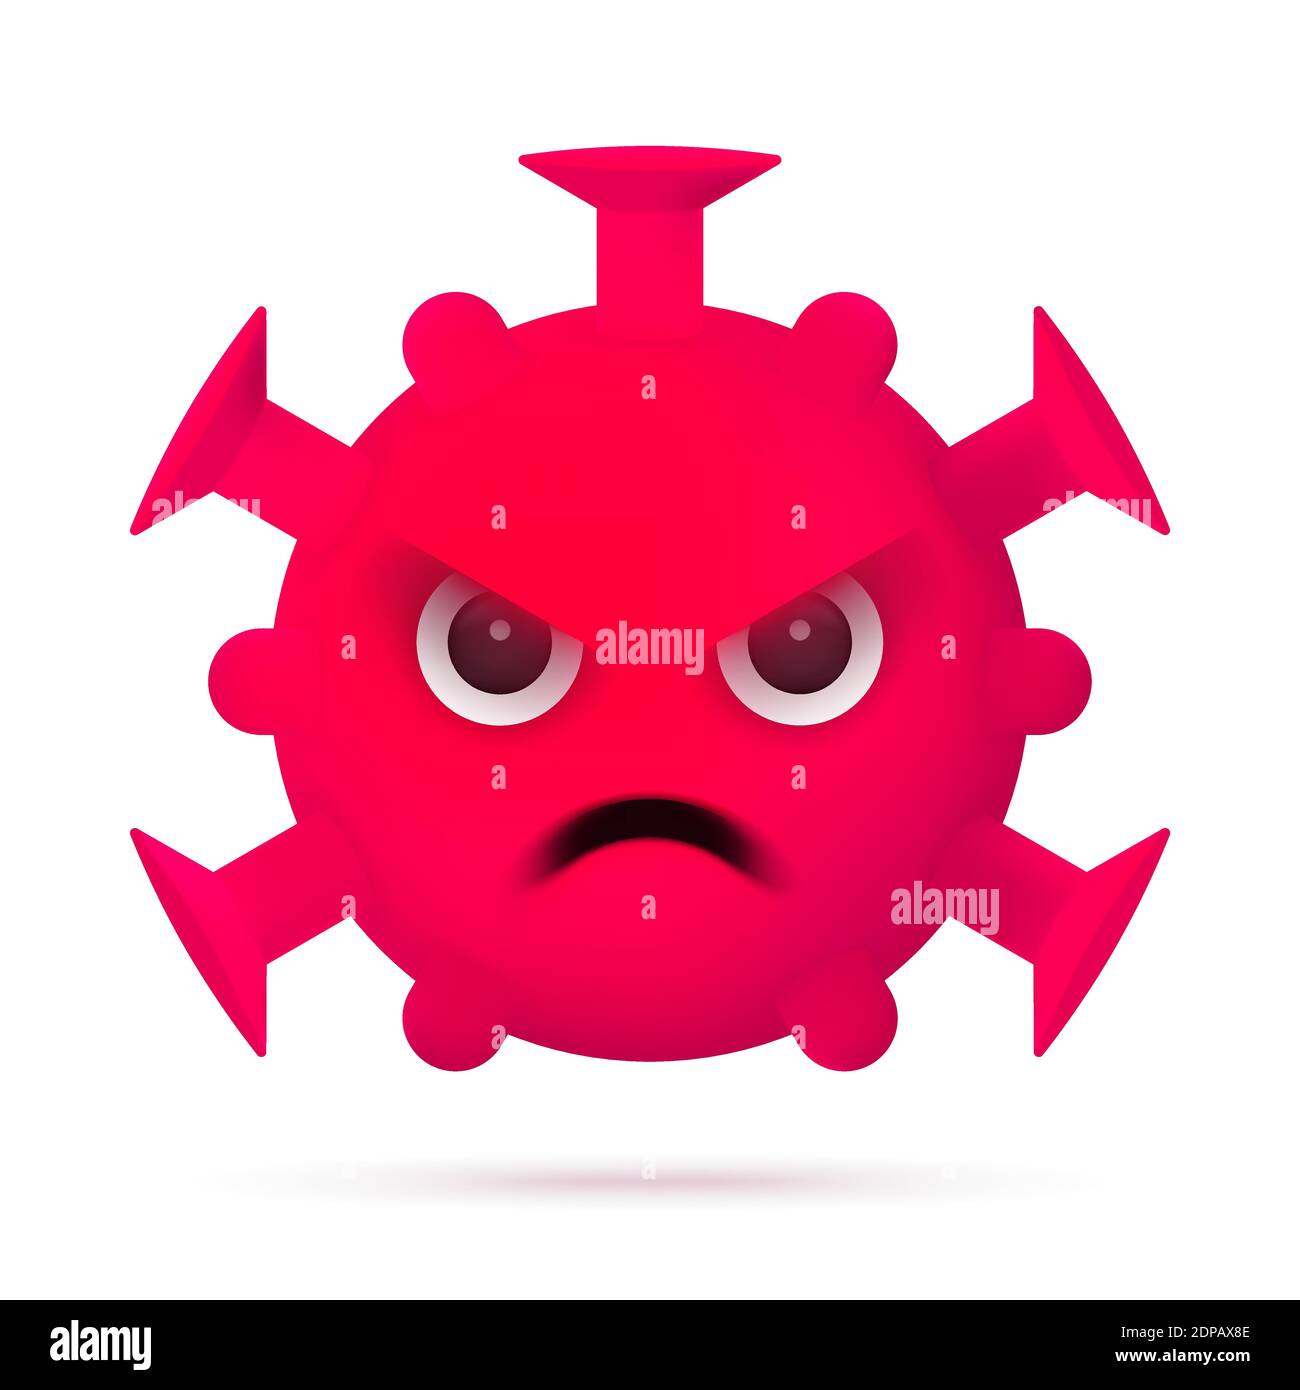 Red Angry Virus Emoticon. Coronavirus Emoji Zeichen Symbol. COVID-19 Pandemic 3D-Symbol. Moderne Flache Vektorgrafik. Eps 10 Stock Vektor